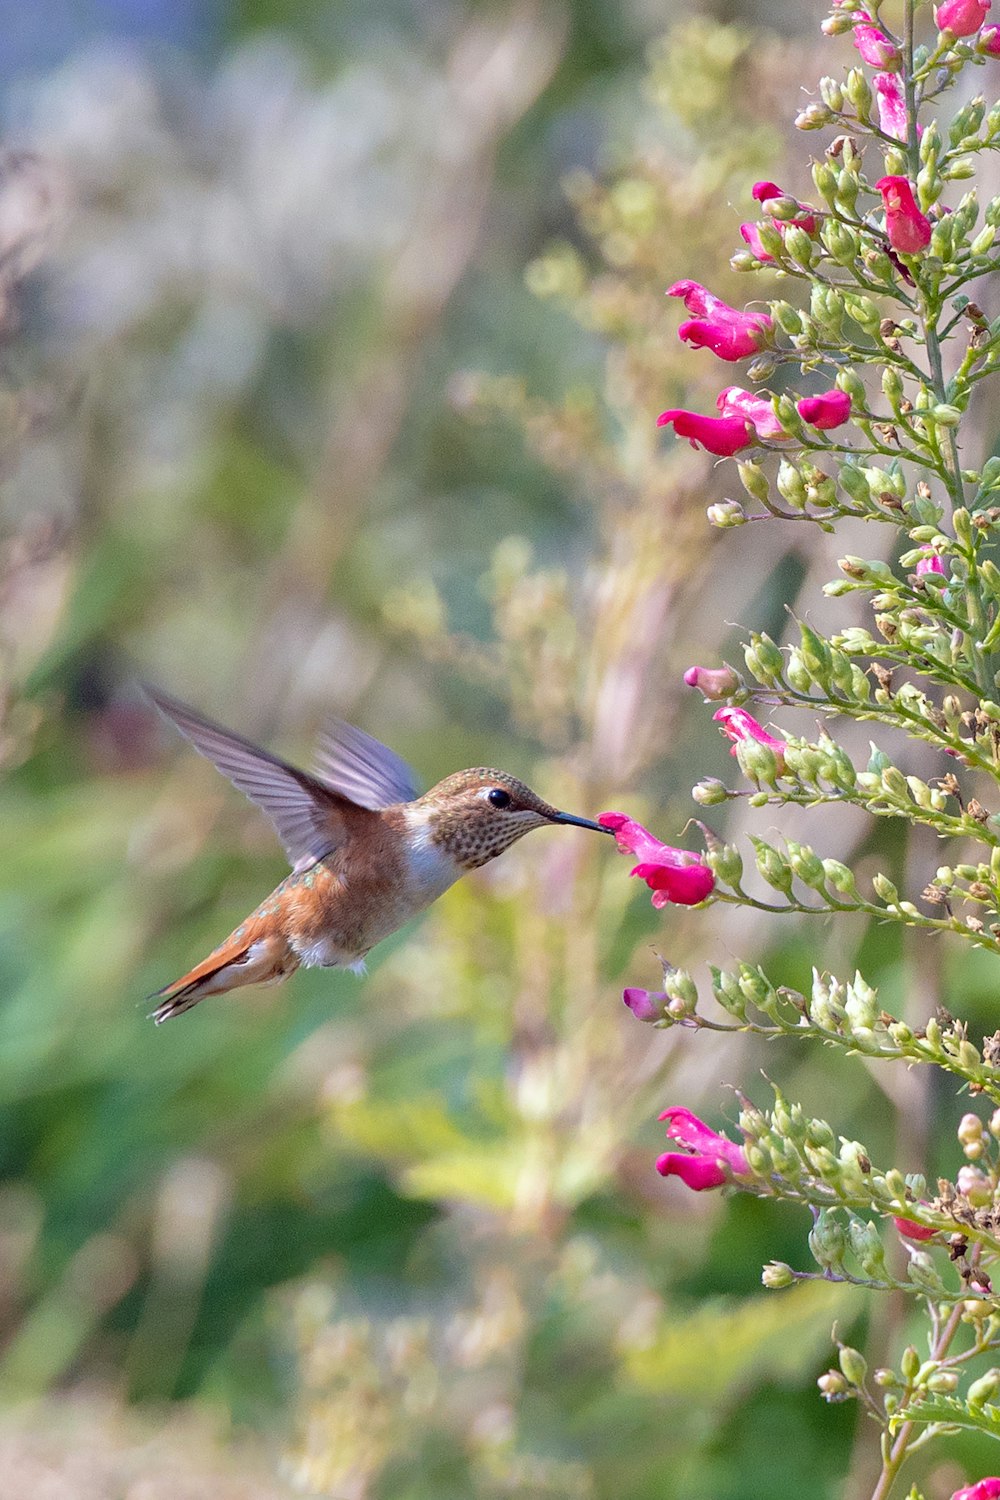 brown humming bird flying near pink flowers during daytime